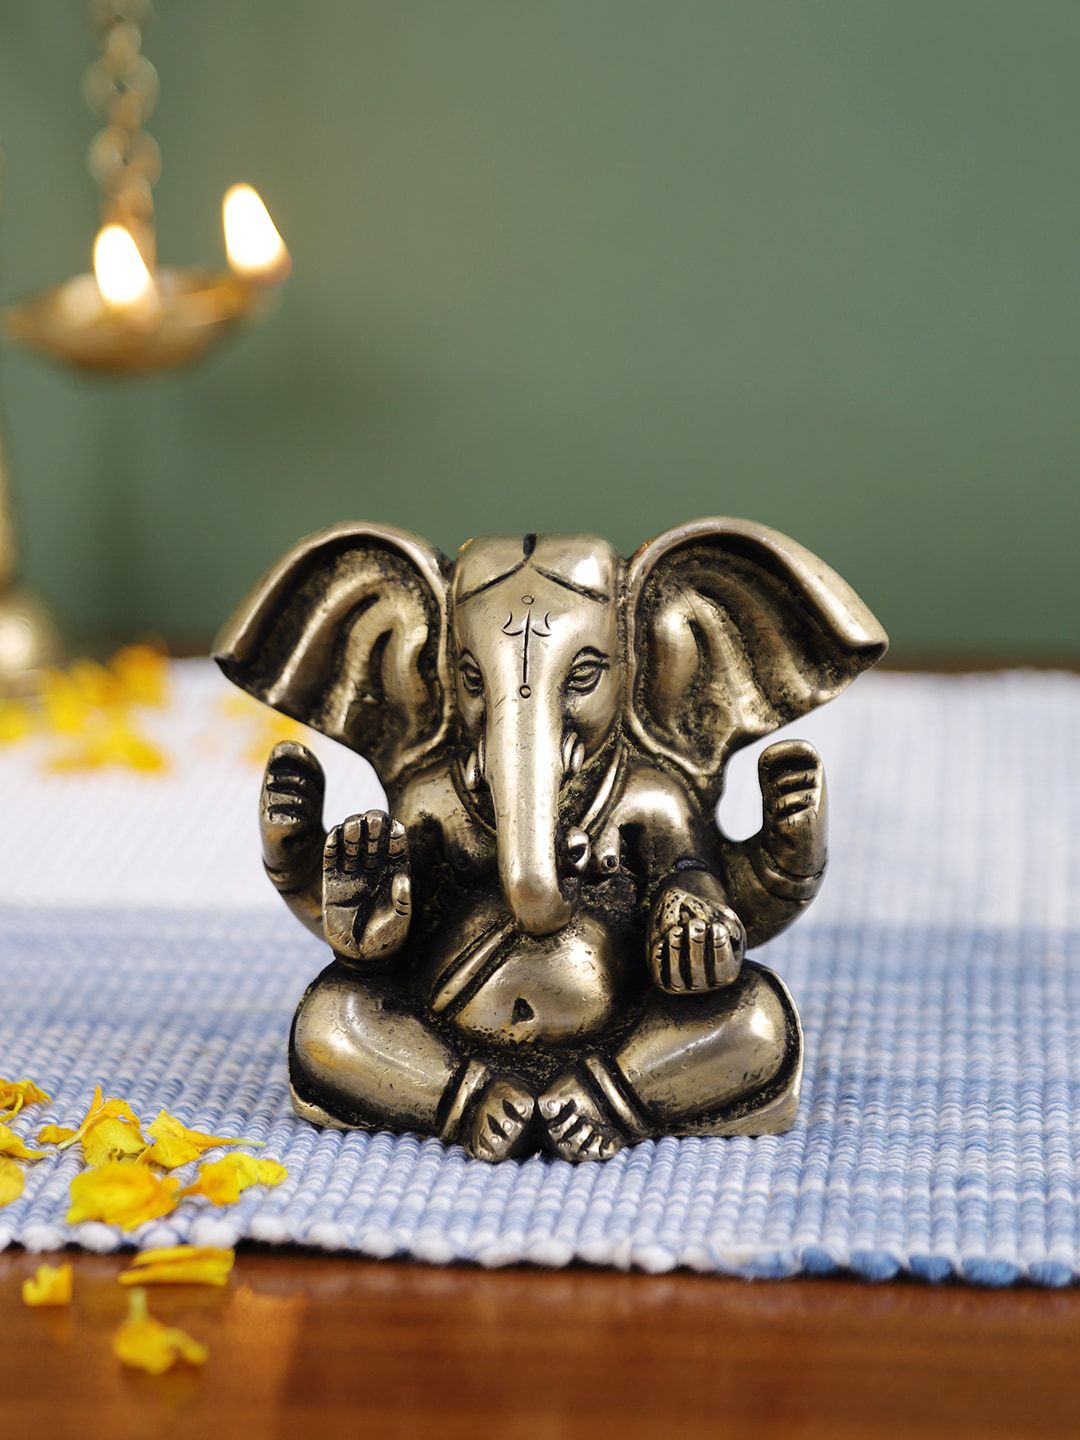 Imli Street Gold-Toned Ganesh 4 Hands Showpiece Price in India